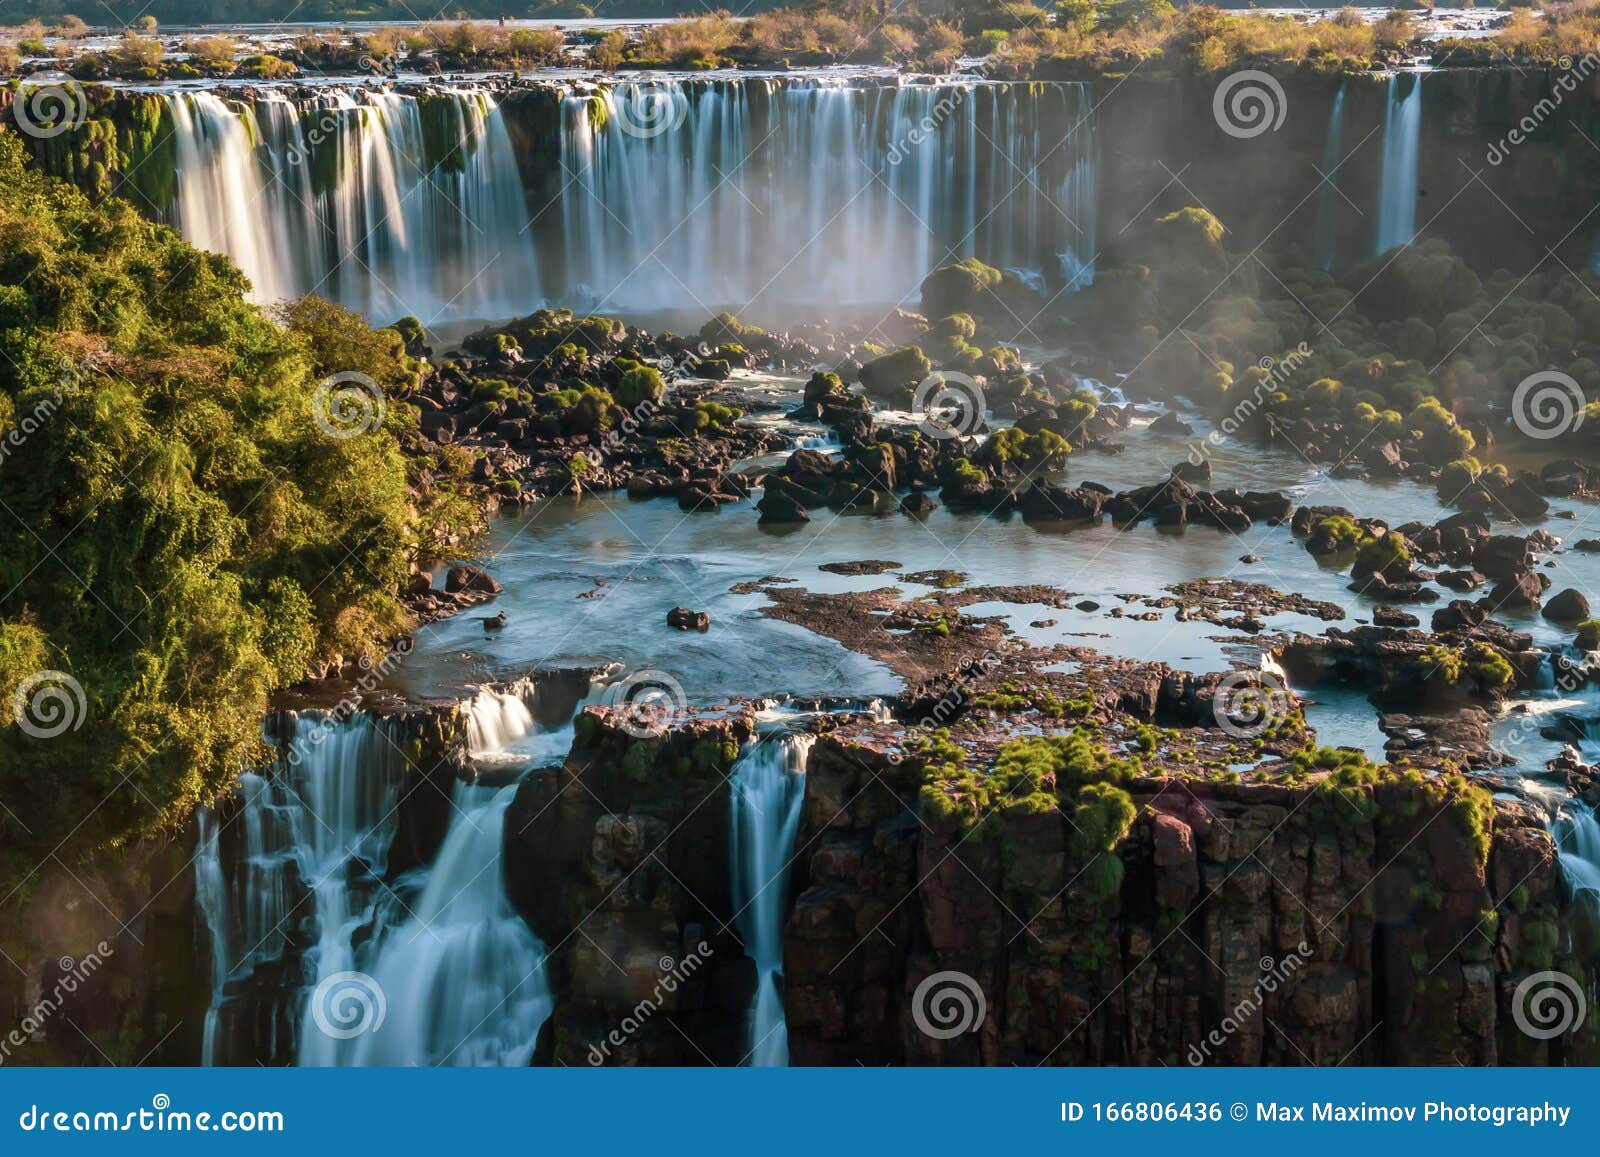 igauzu waterfall, brazil - colorful iguazu waterfall - cataratas do iguasu, brasil unesco world heritage